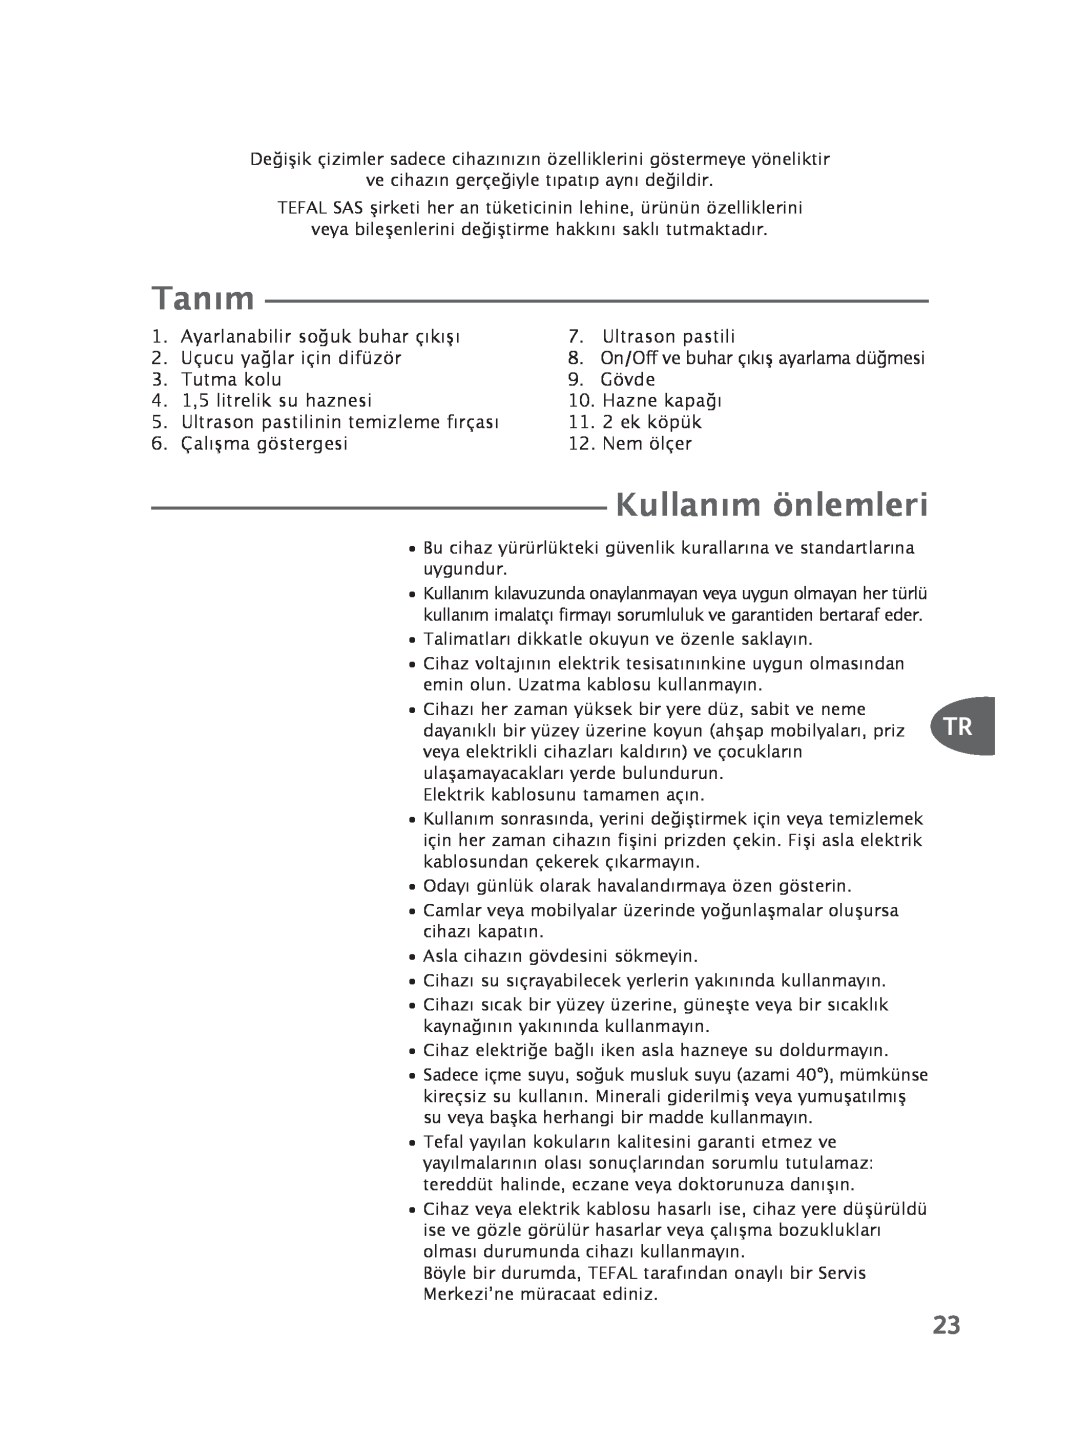 Groupe SEB USA - T-FAL Compact Humidifier manual Tanım, Kullanım önlemleri 